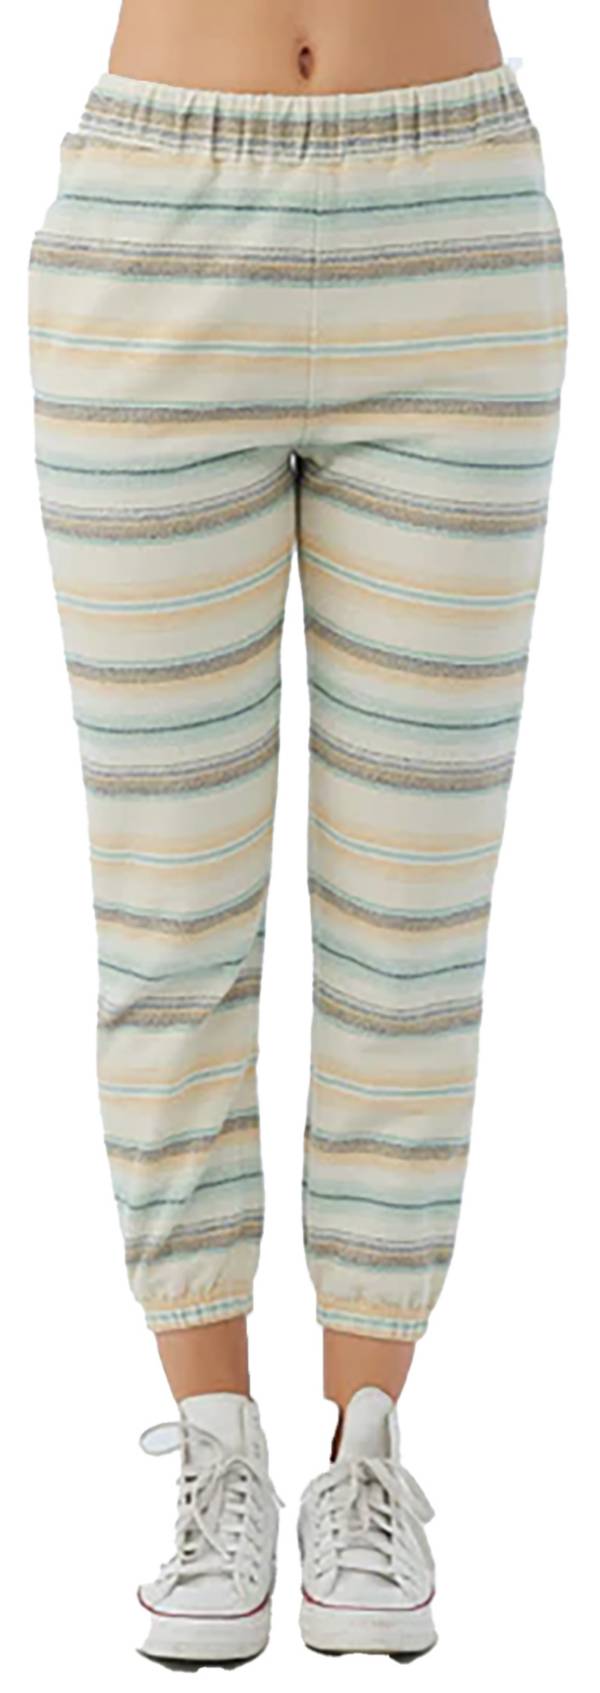 O'Neill Women's Rosarito Pants product image